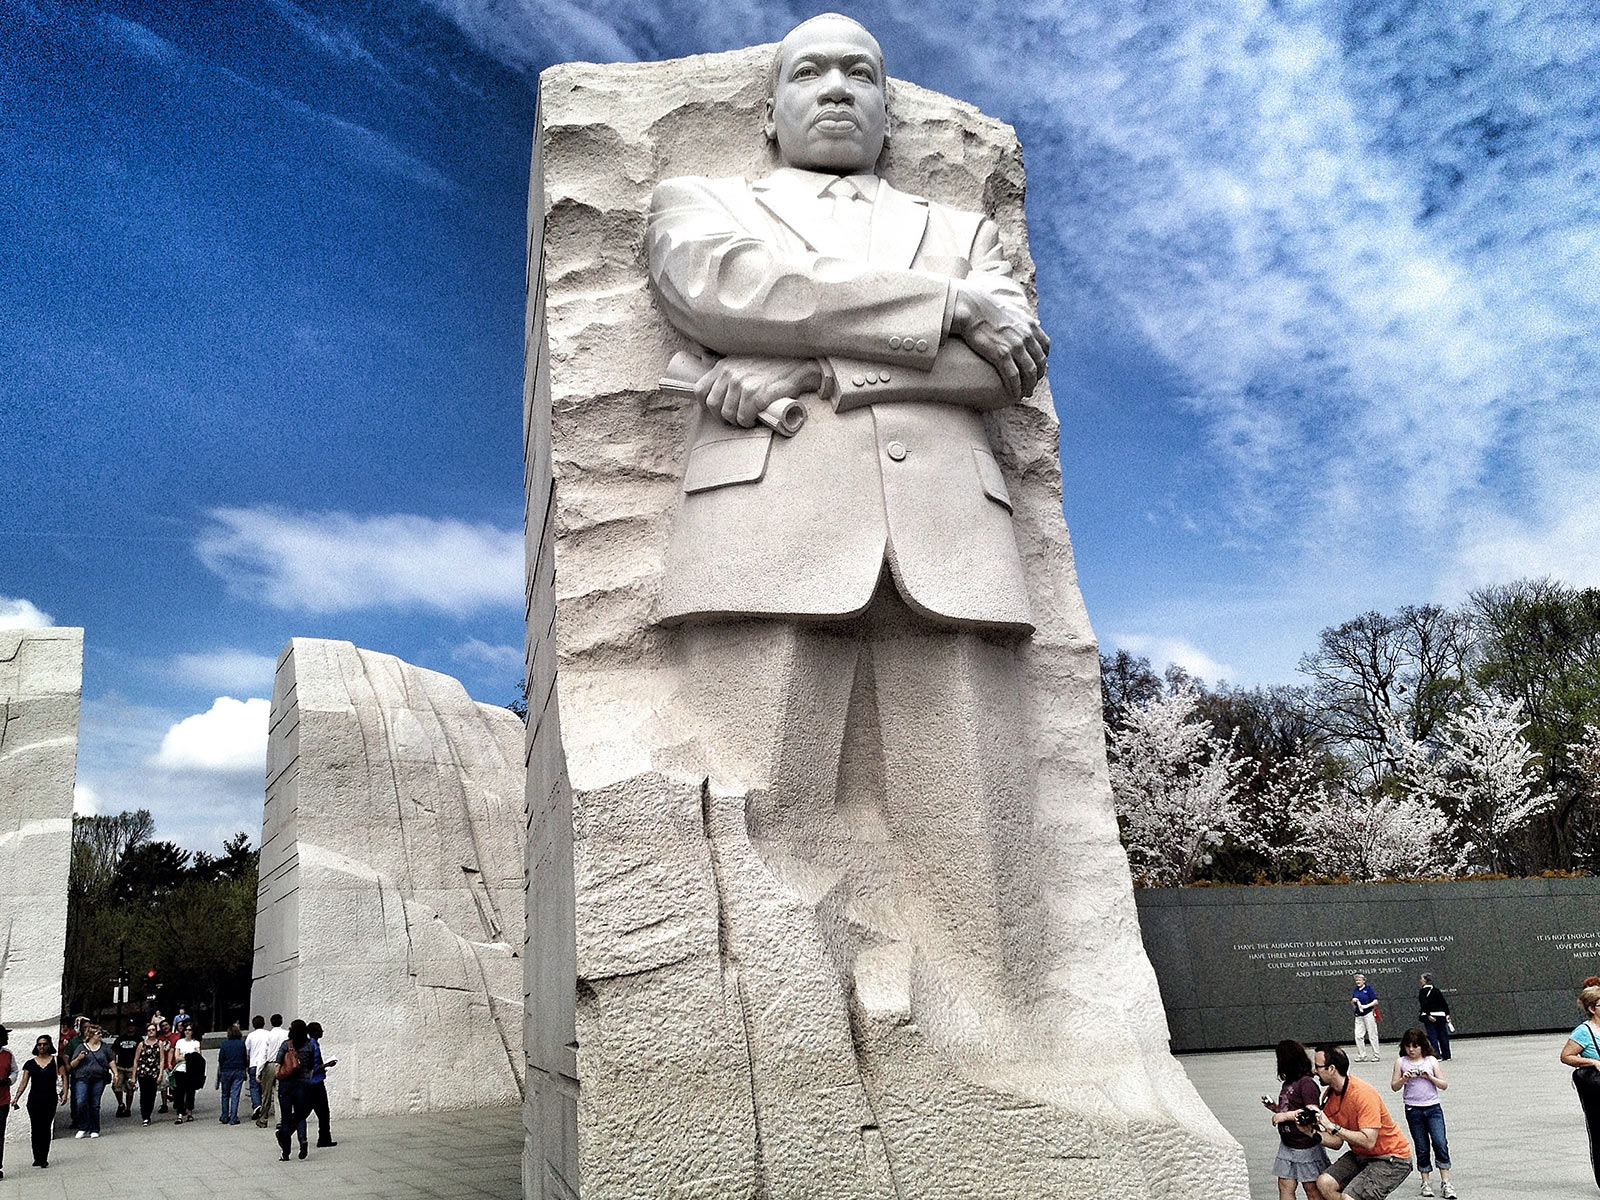 Le mémorial Martin Luther King, Jr. - National Mall - Washington, DC